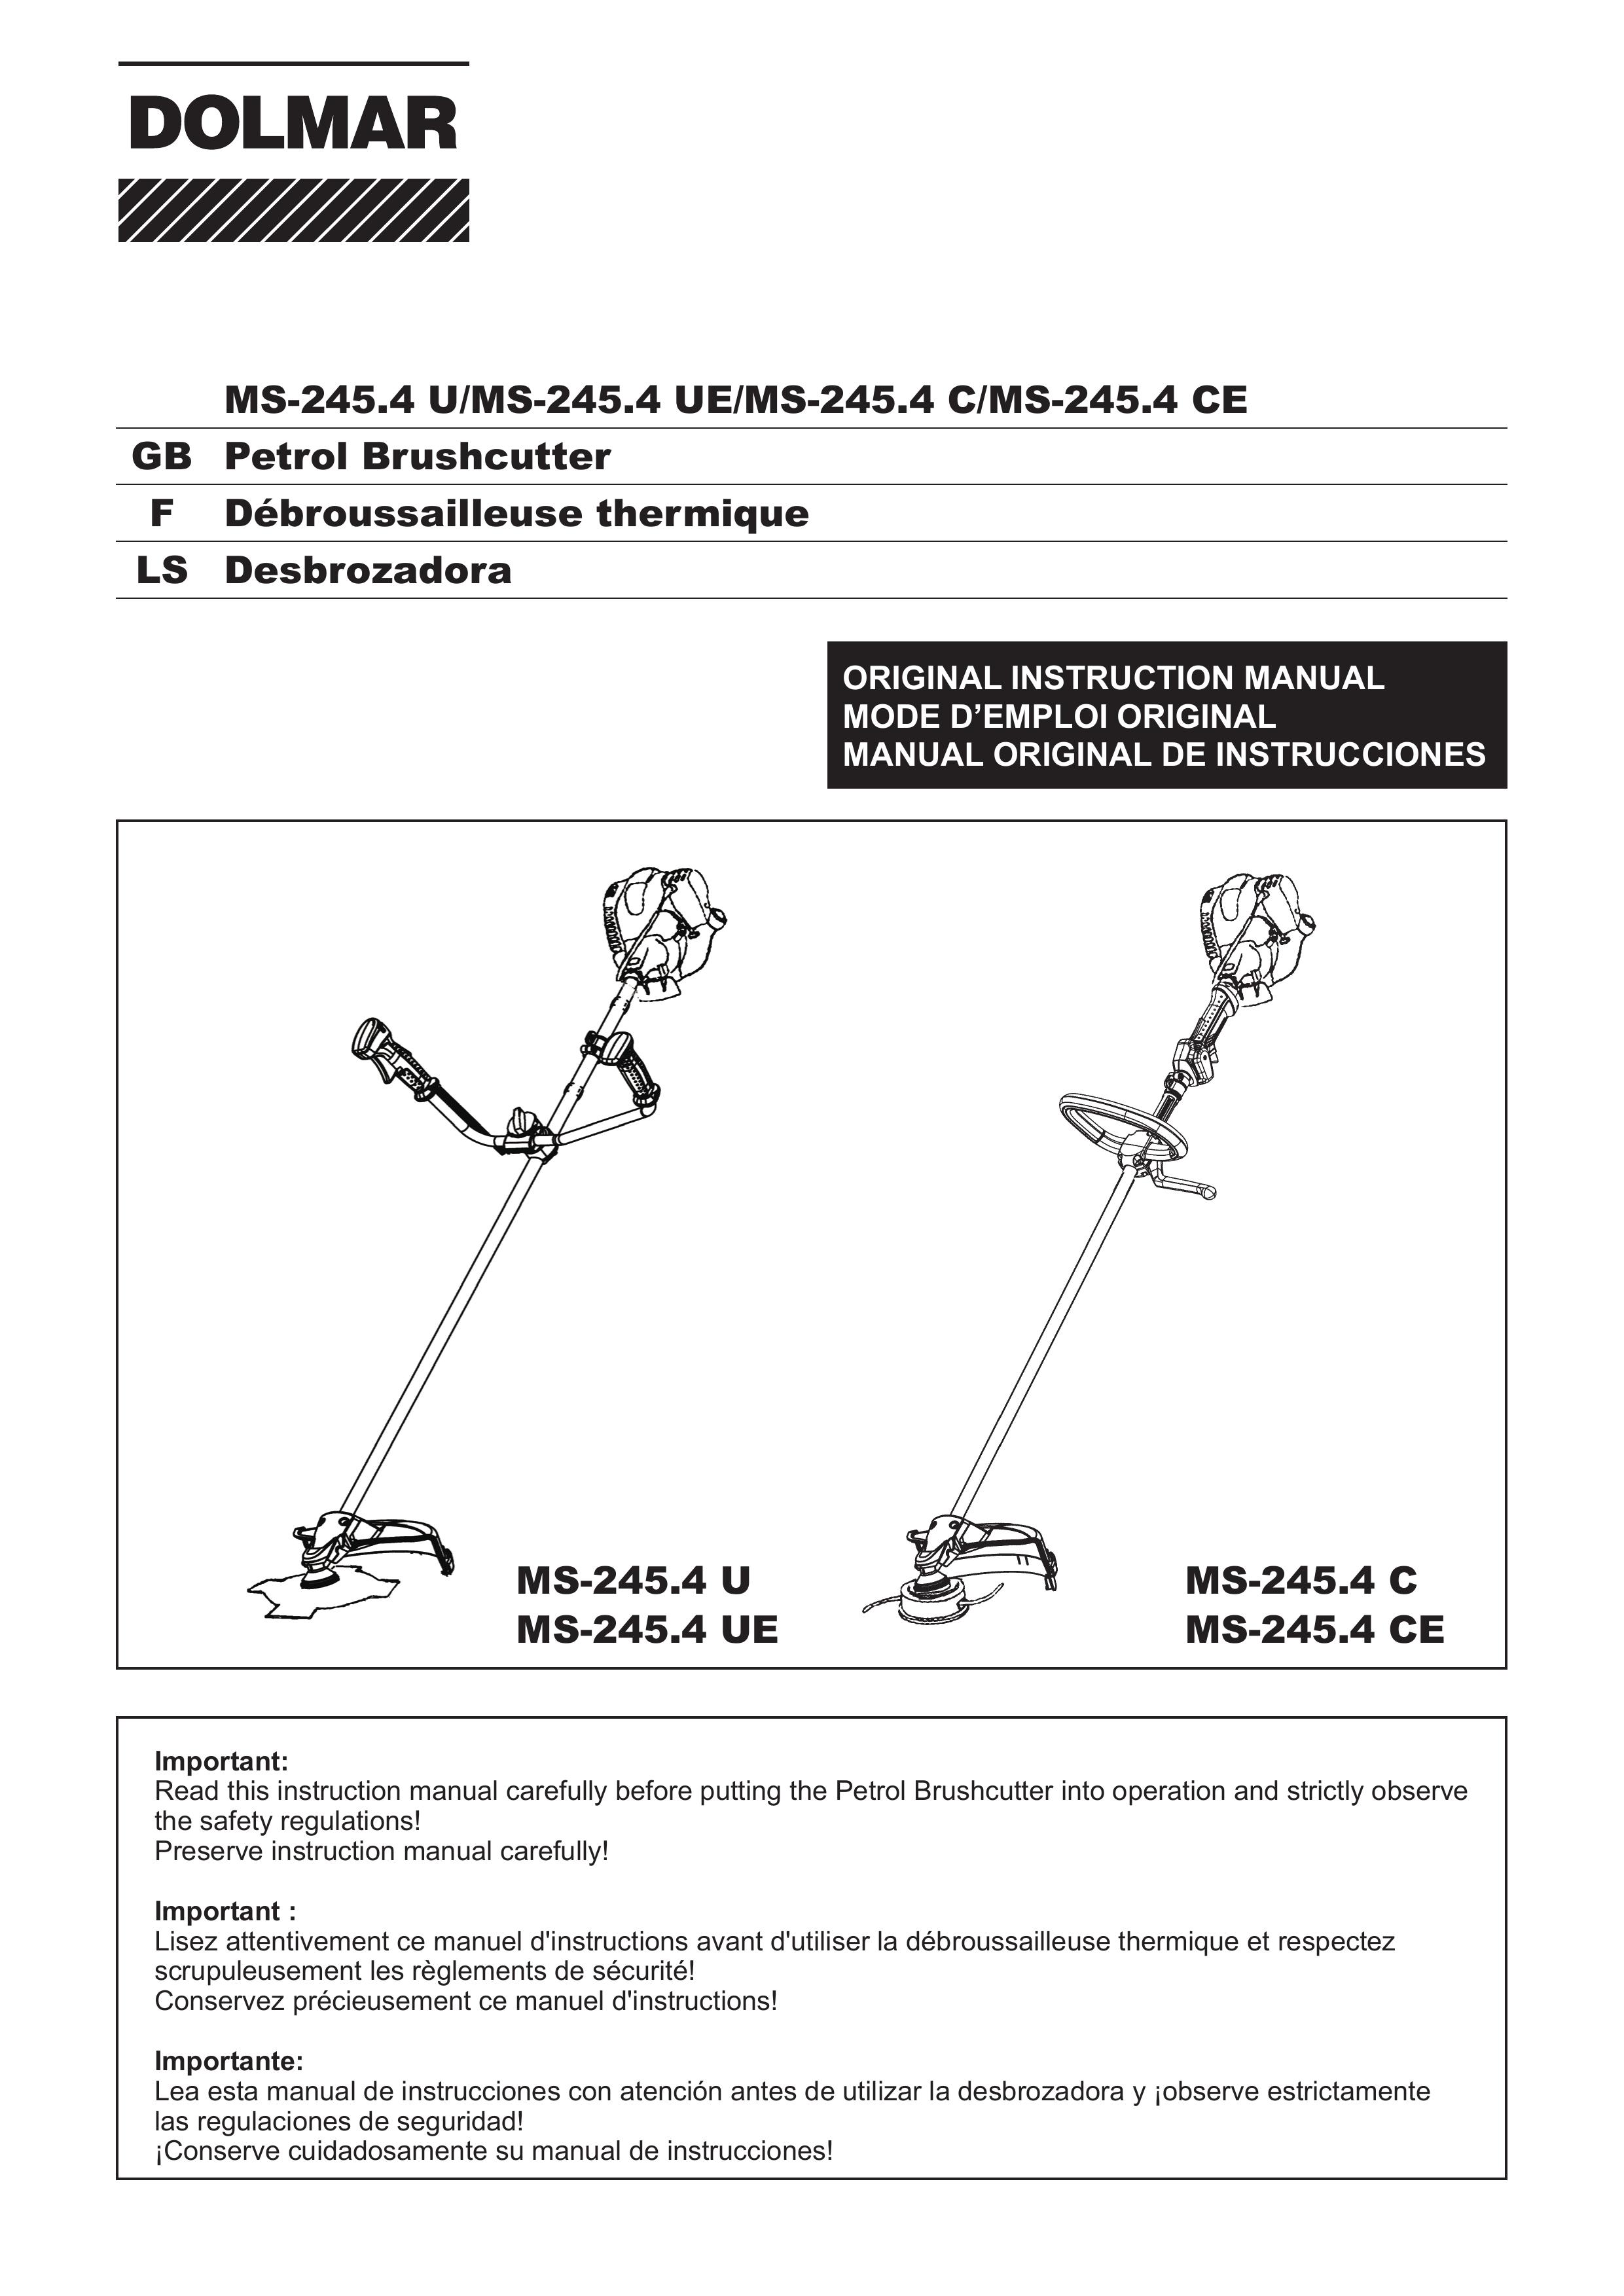 Dolmar MS-245.4 UE Brush Cutter User Manual